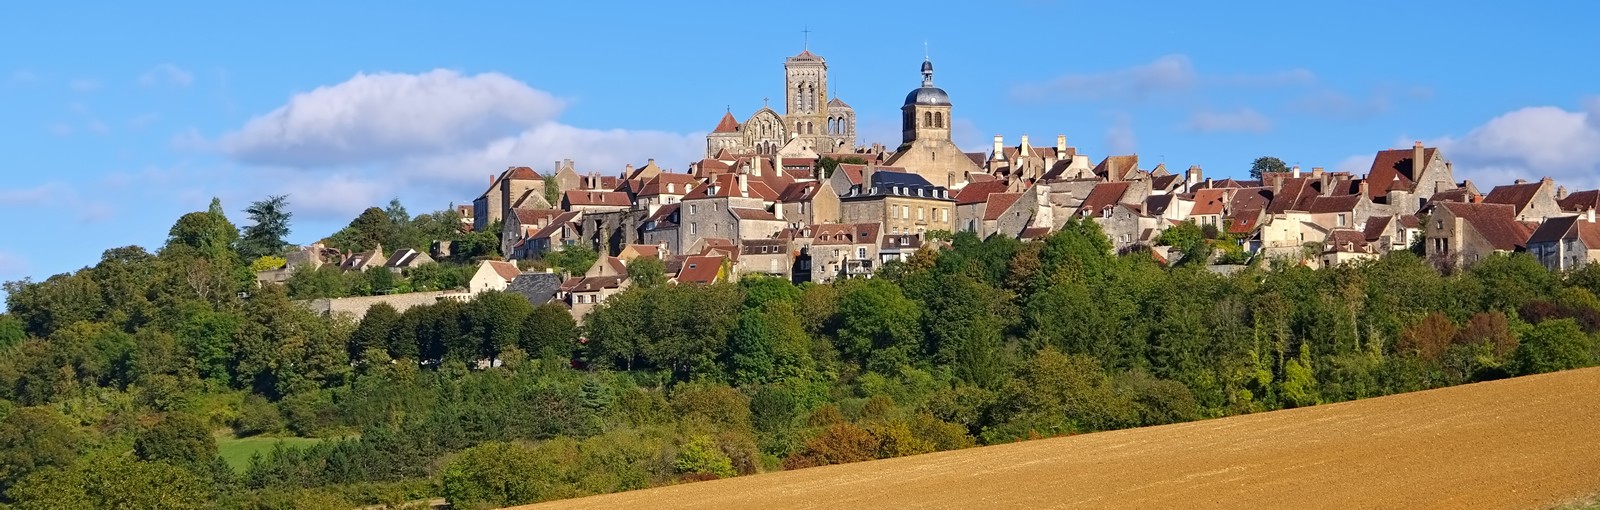 Tours 2 días en Borgoña: recorrido del Yonne y de los viñedos de 'Côtes de Beaune' - Borgoña - Circuitos desde Paris